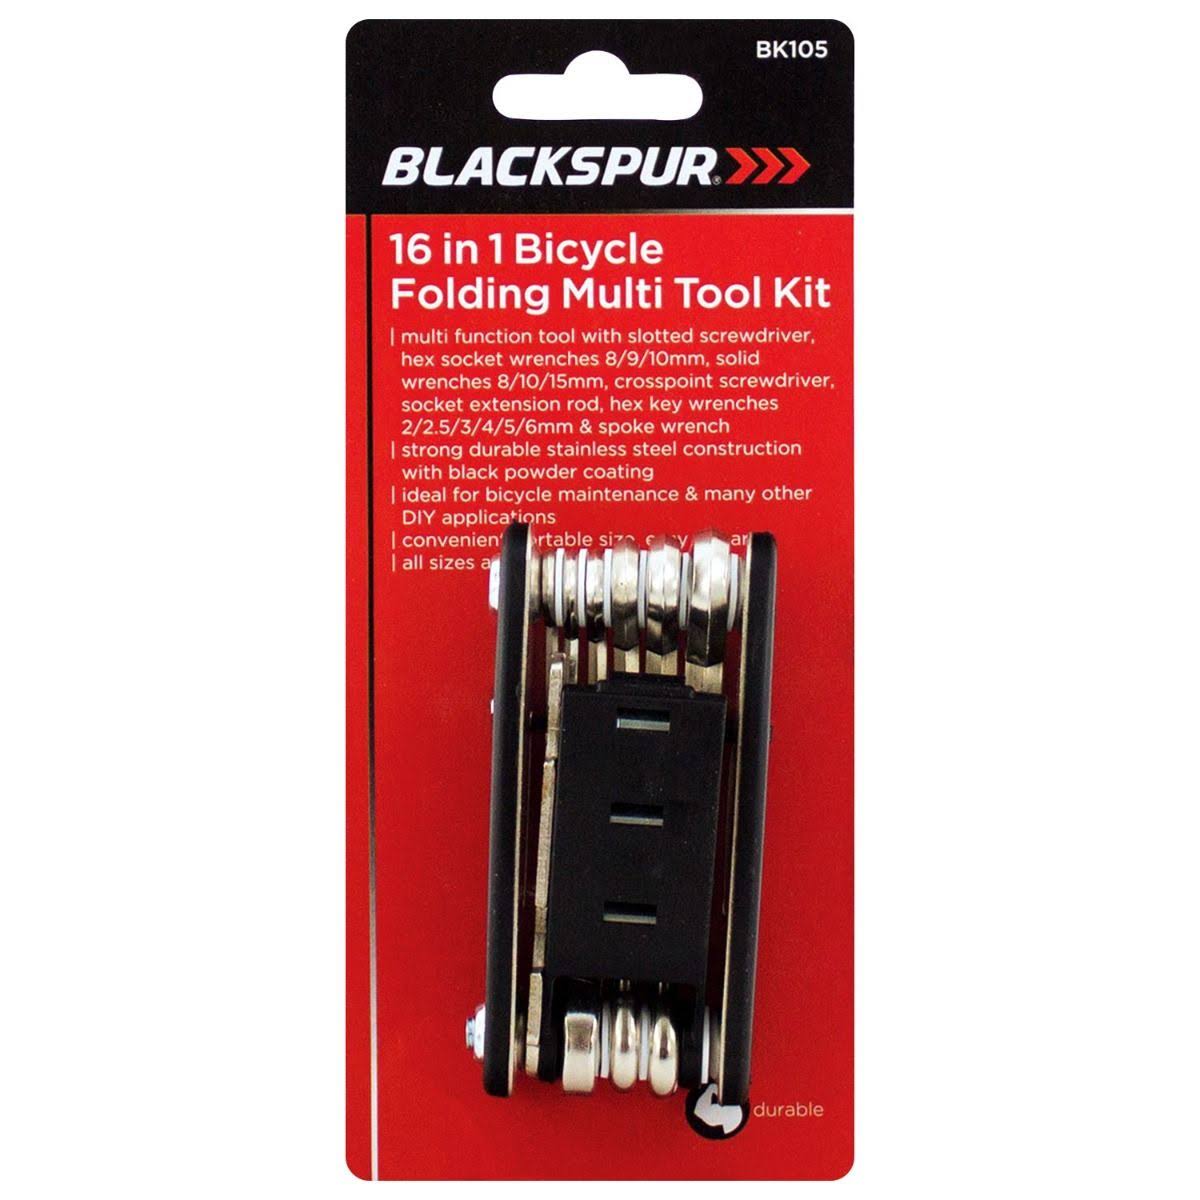 Blackspur 16-in-1 Folding Bicycle Multi Tool Kit, Black